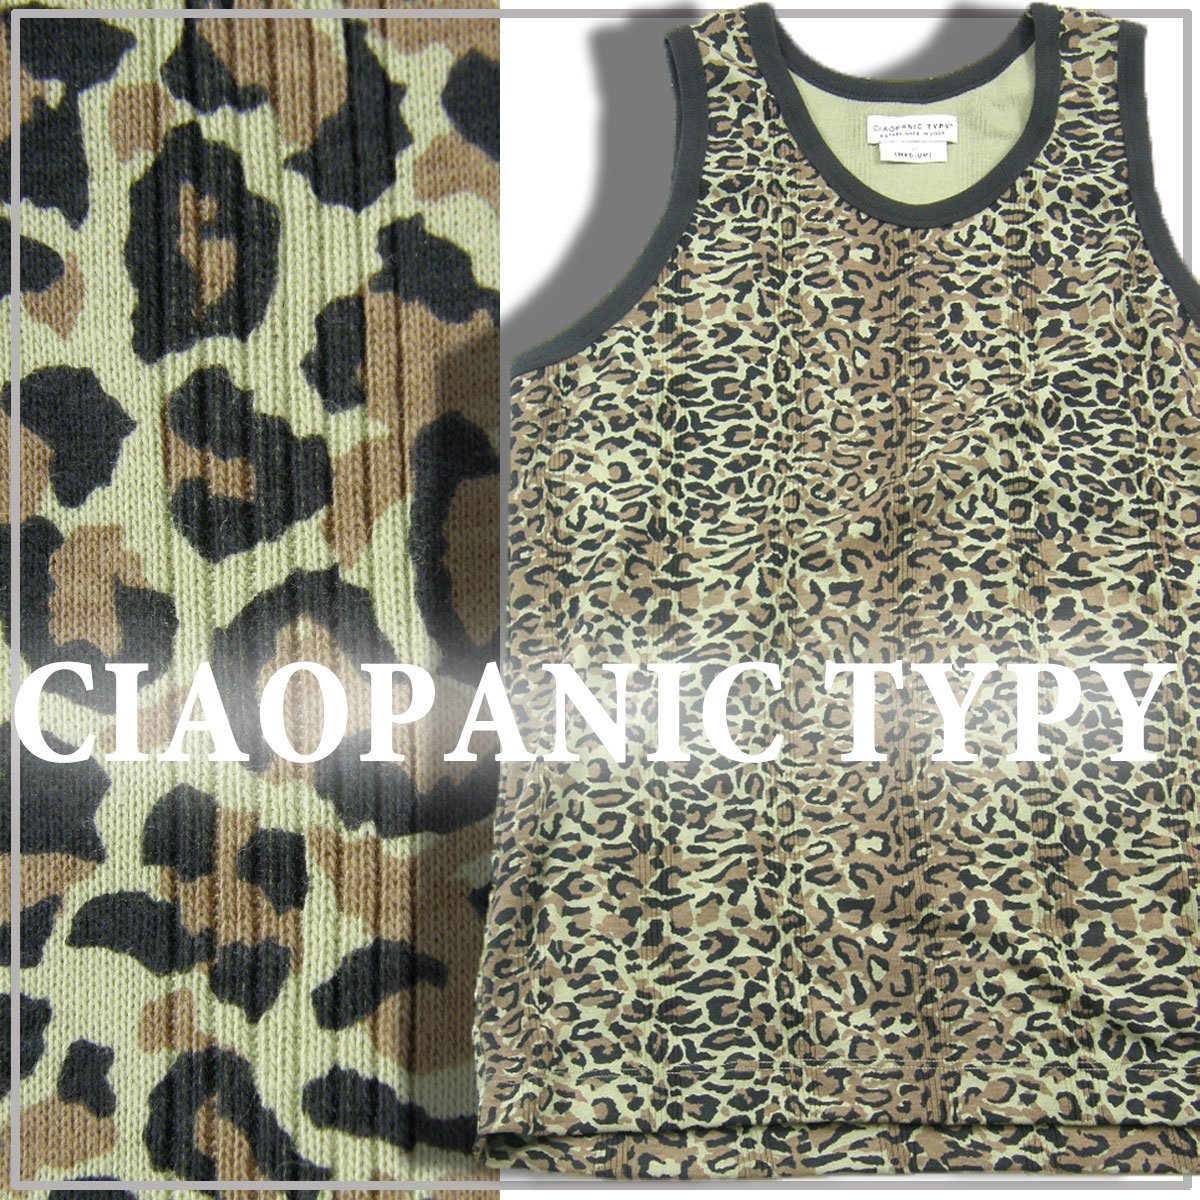  new goods CIAOPANIC TYPY [ leopard print / Leopard ] tank top M *333616 Ciaopanic 